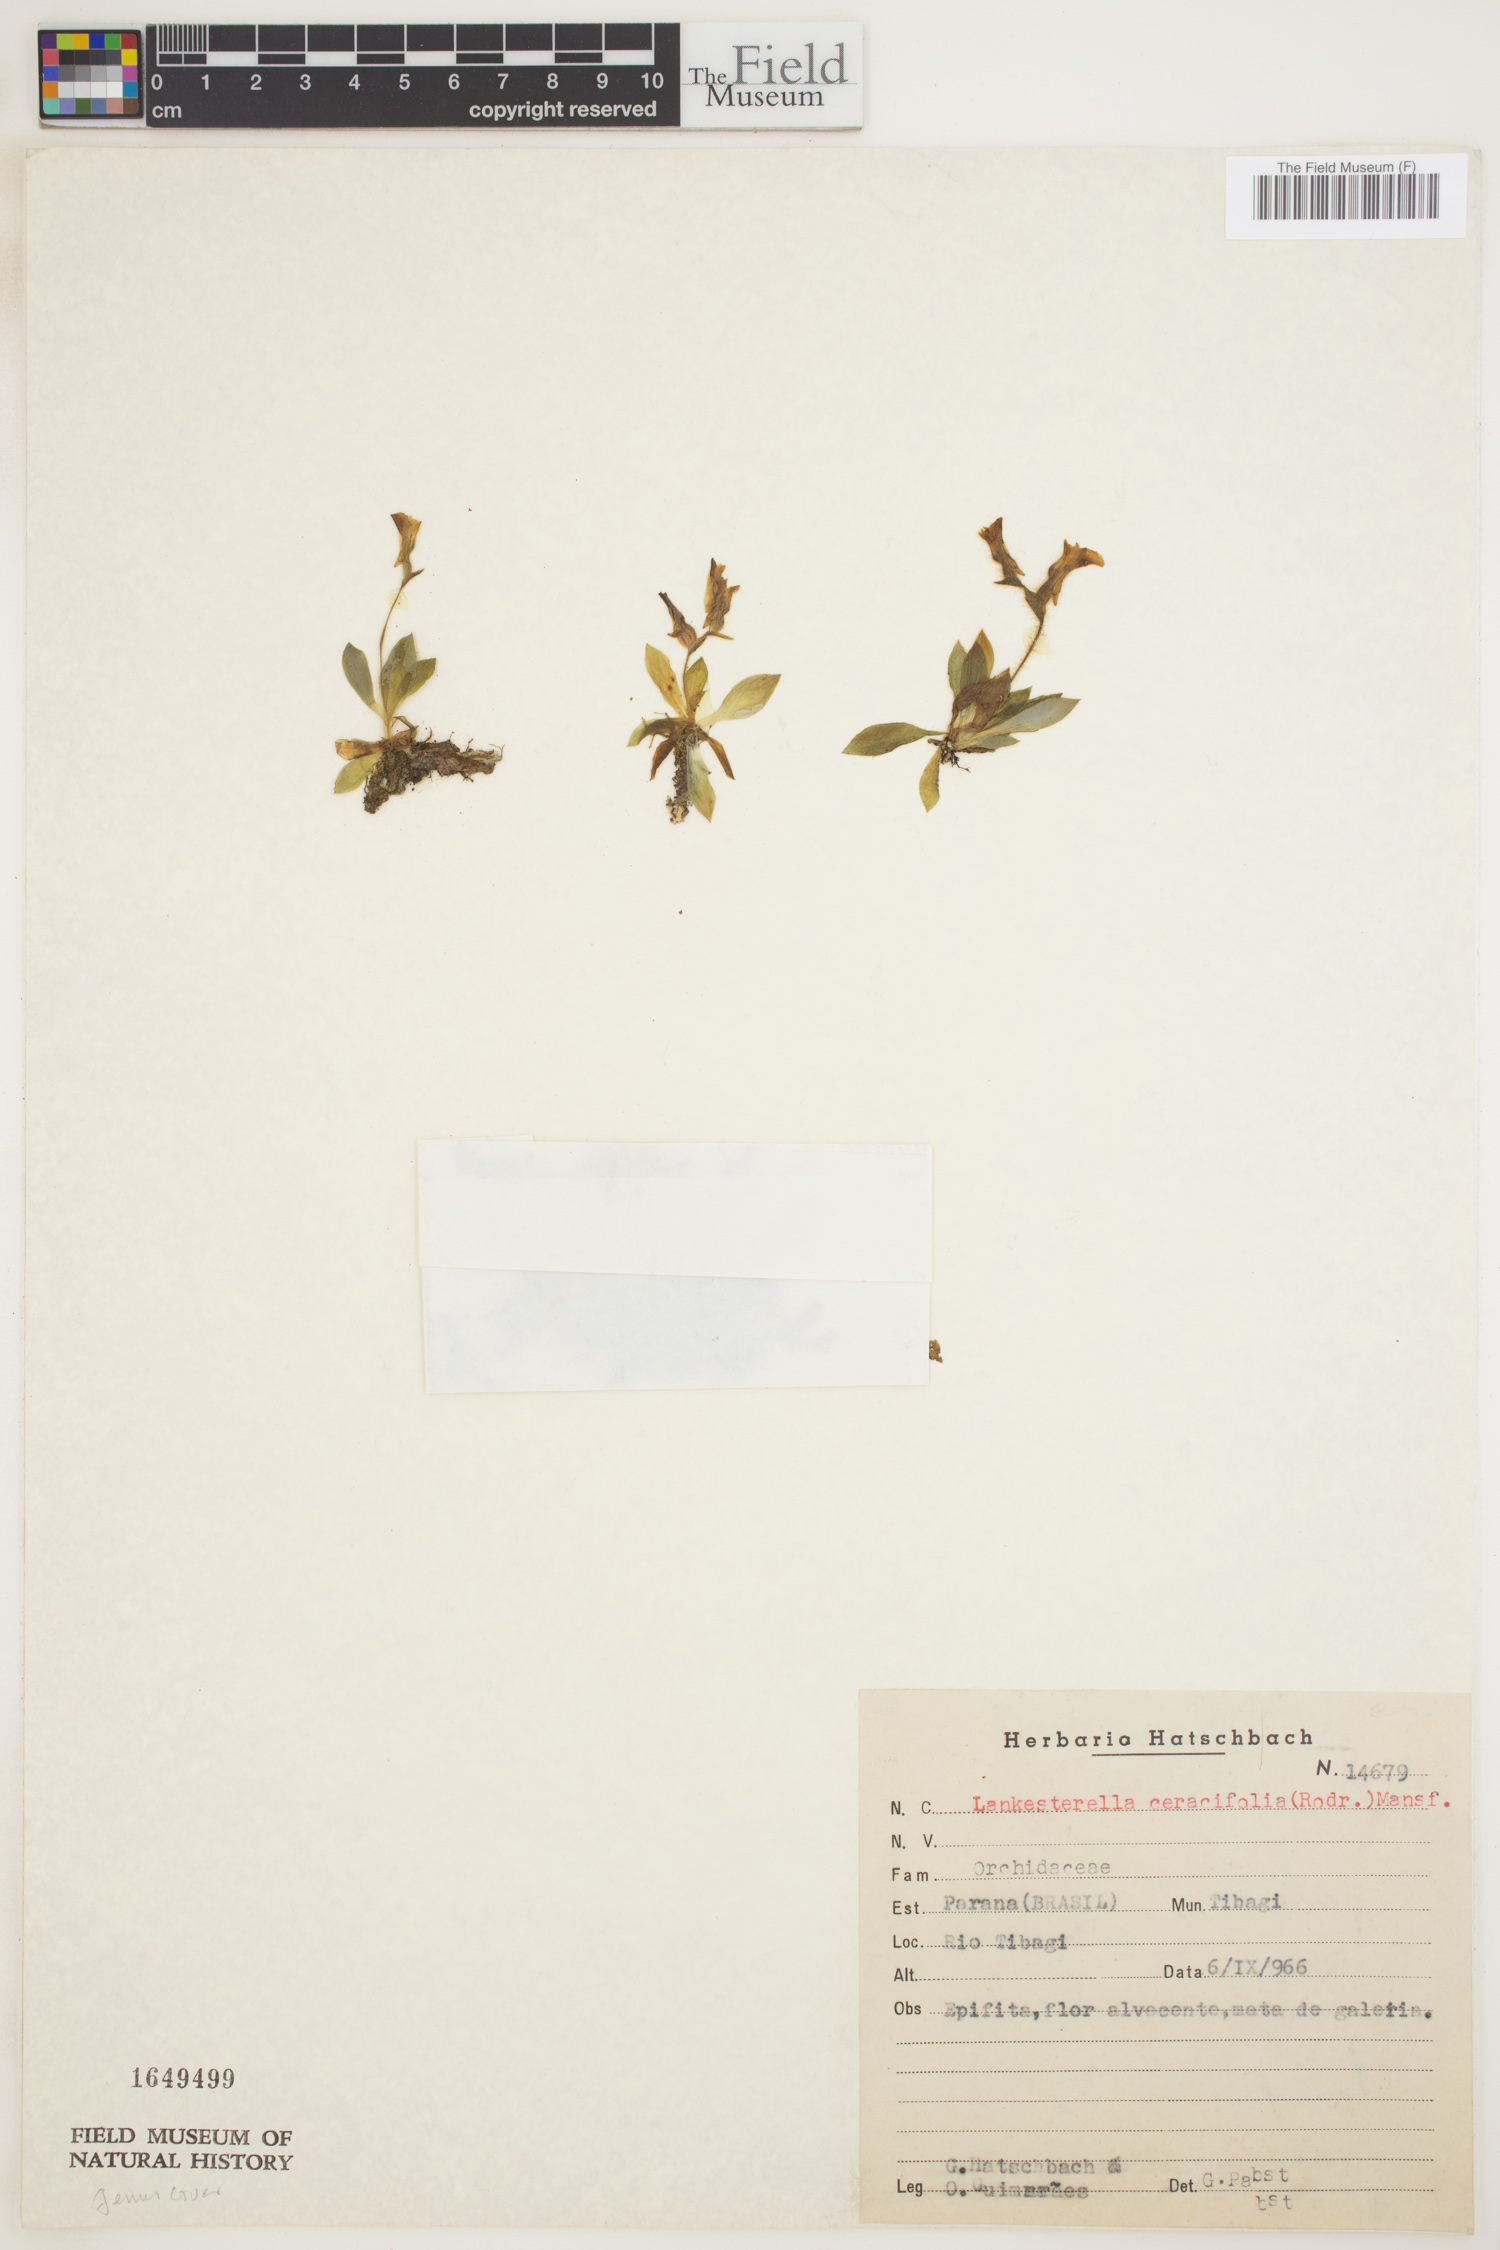 Lankesterella ceracifolia image